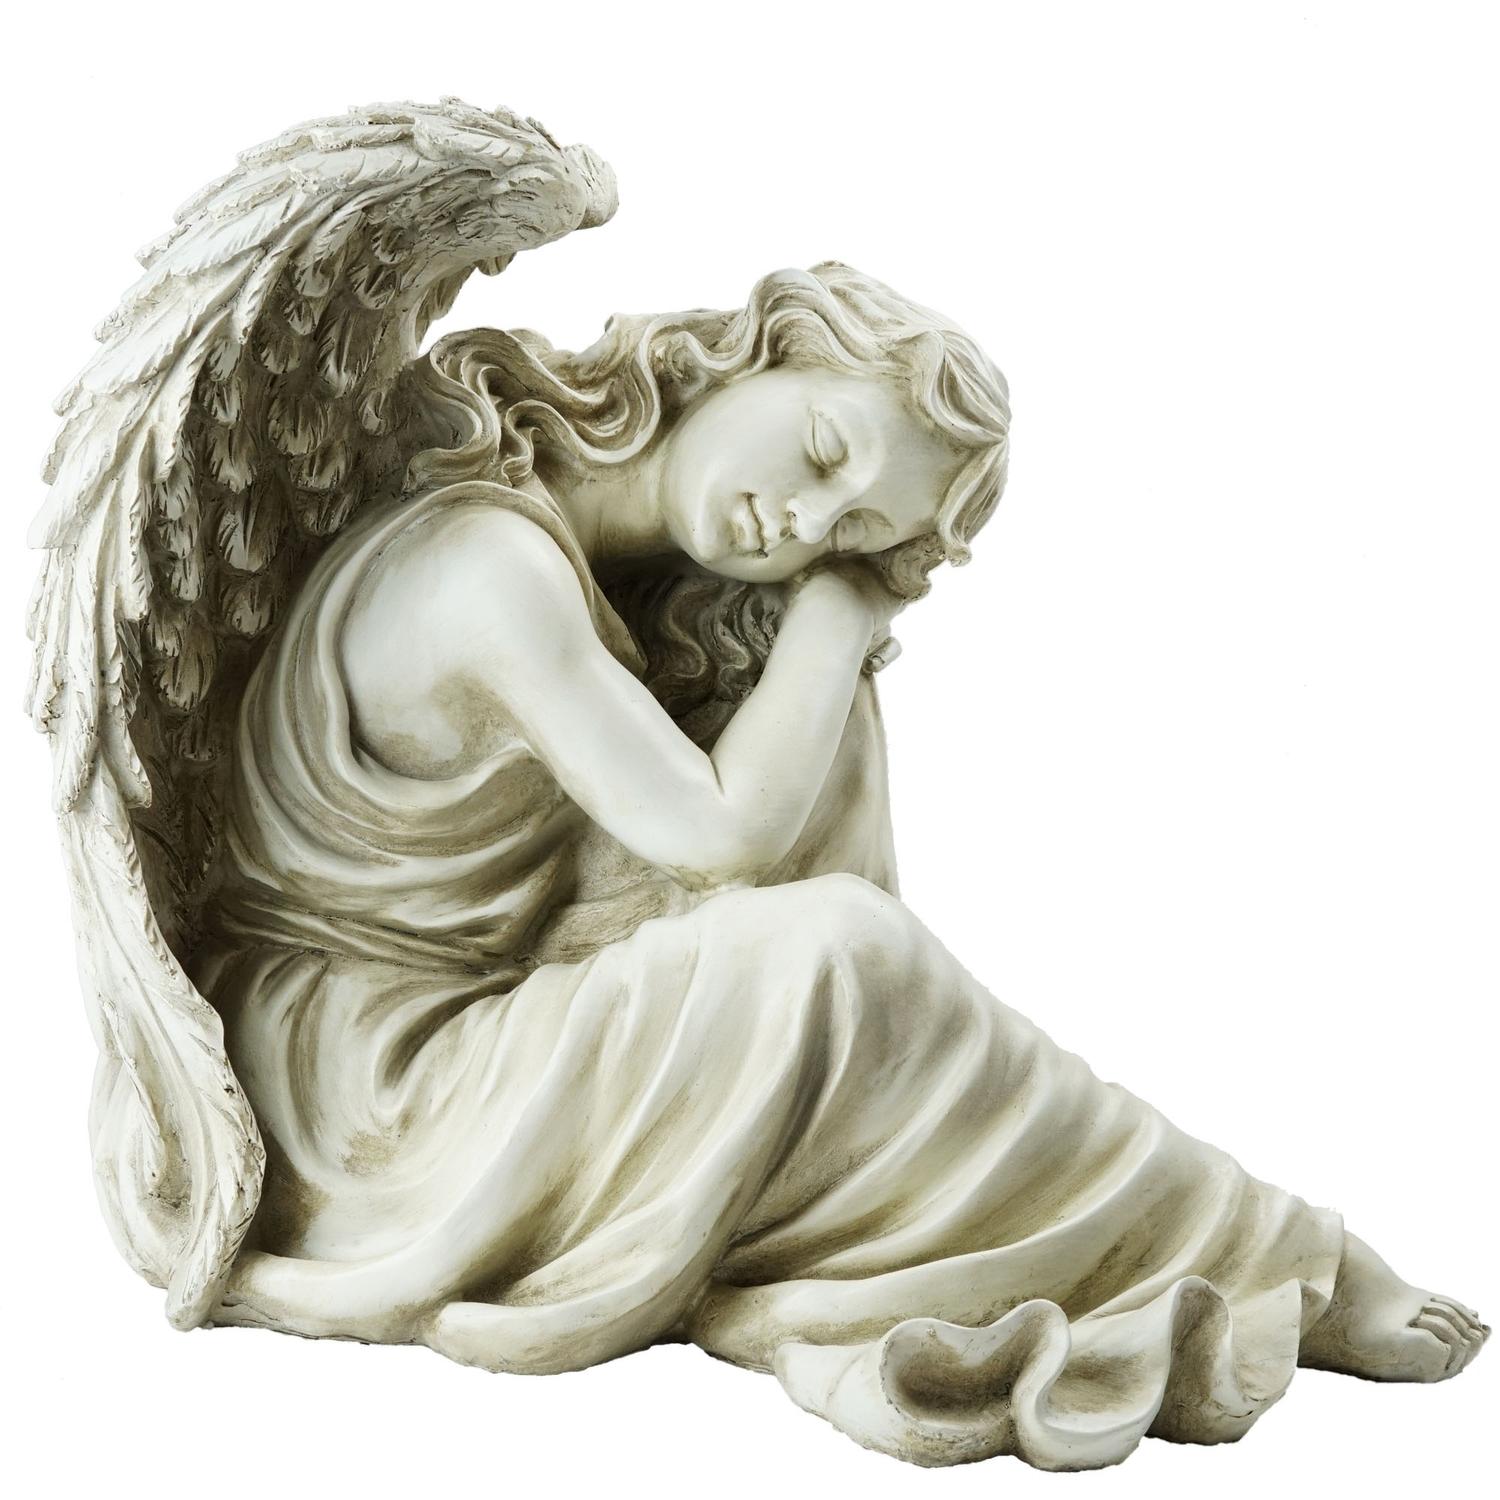 19" Resting Angel Religious Outdoor Garden Statue - image 1 of 4